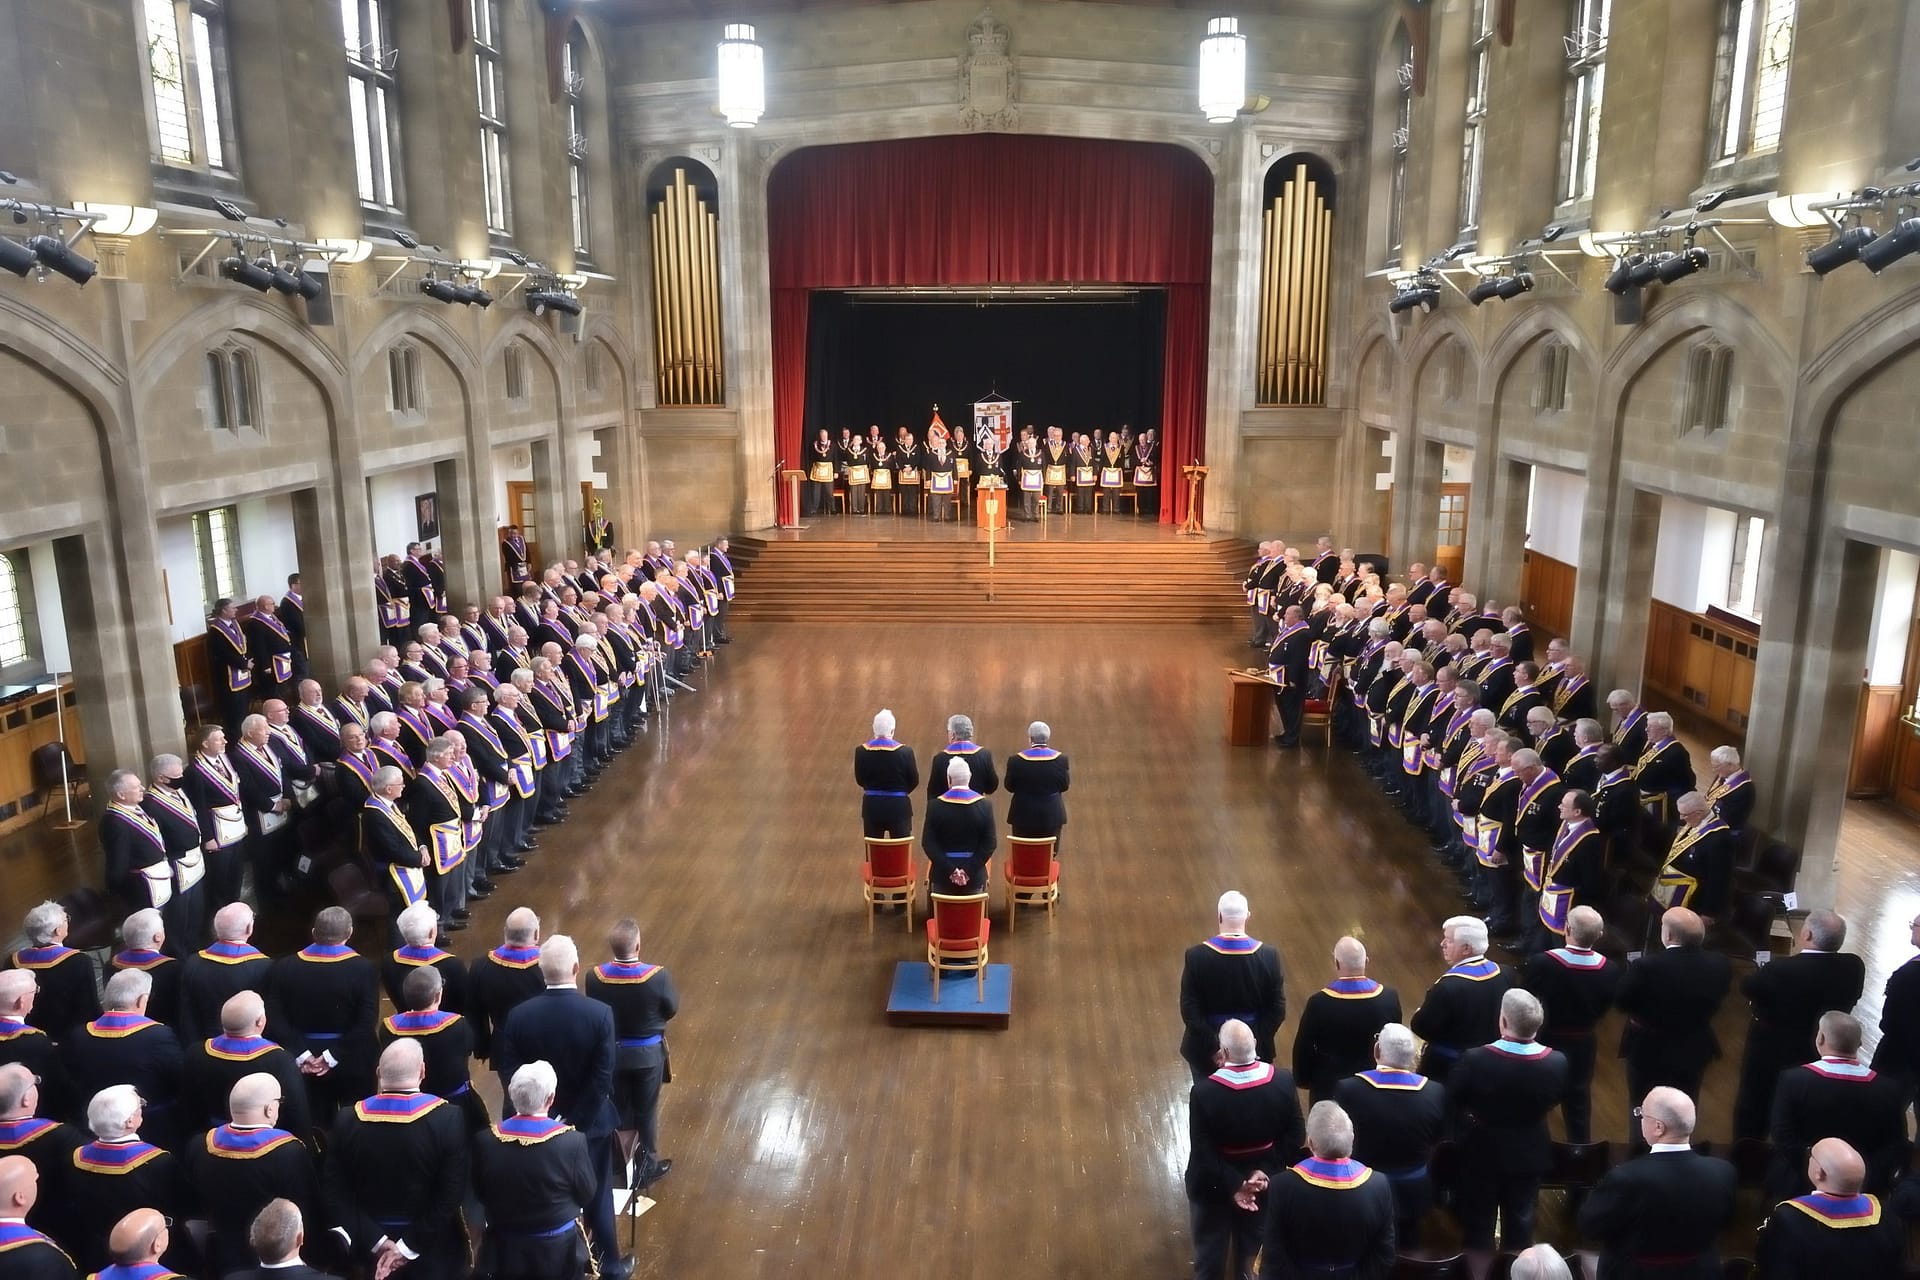 Provincial Grand Lodge of Mark Master Masons, West Yorkshire – Annual Provincial Grand Lodge Meeting 2022.